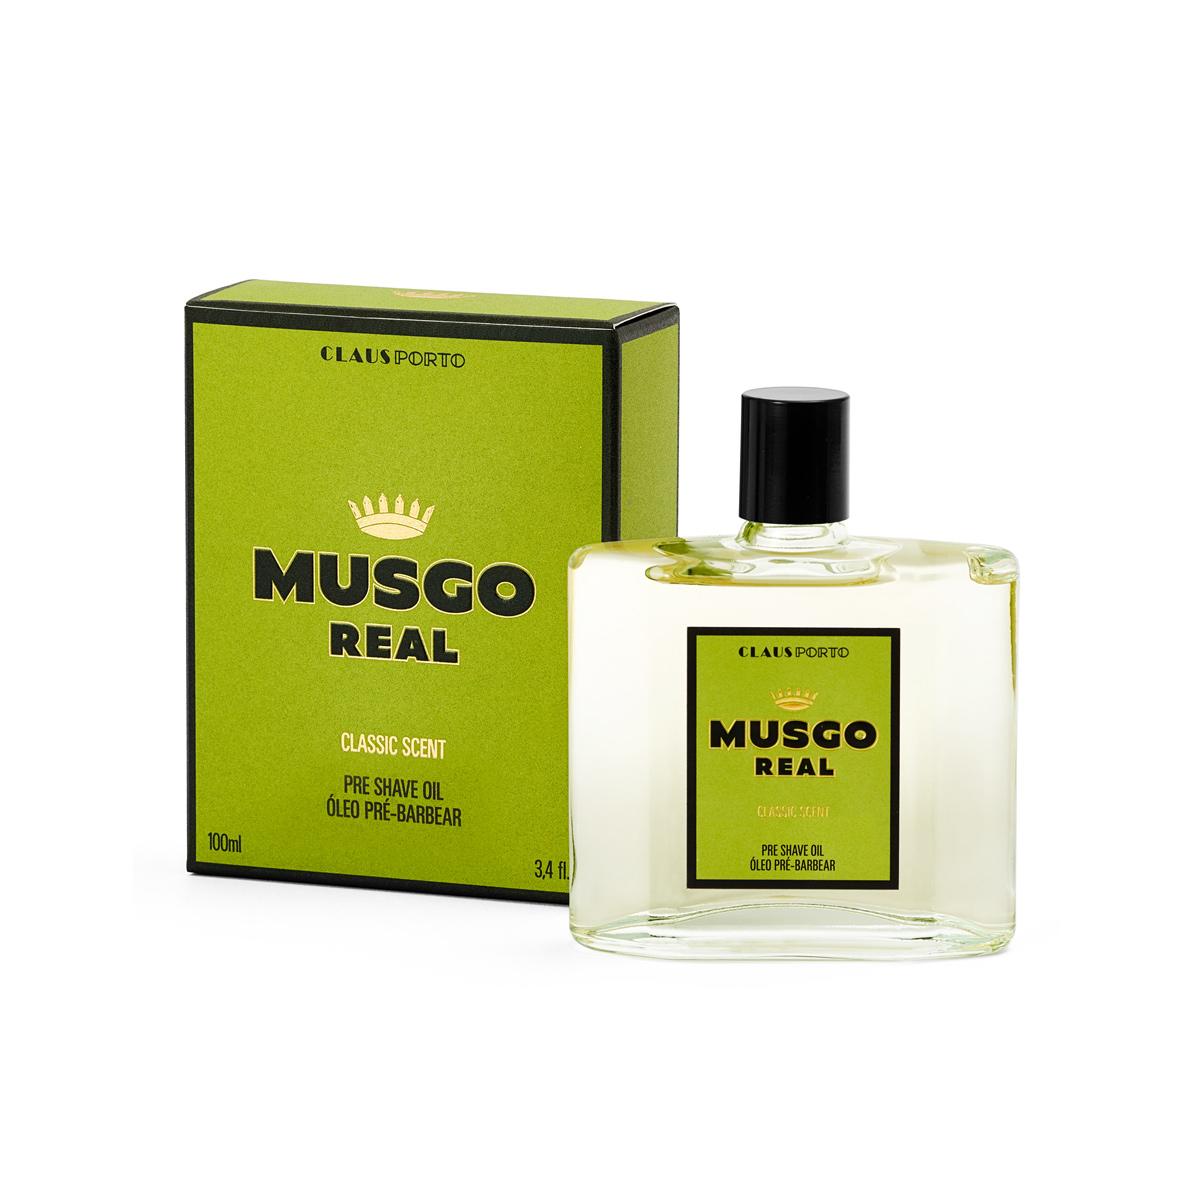 Musgo Real Pre-Shave Oil Classic Scent 100ml